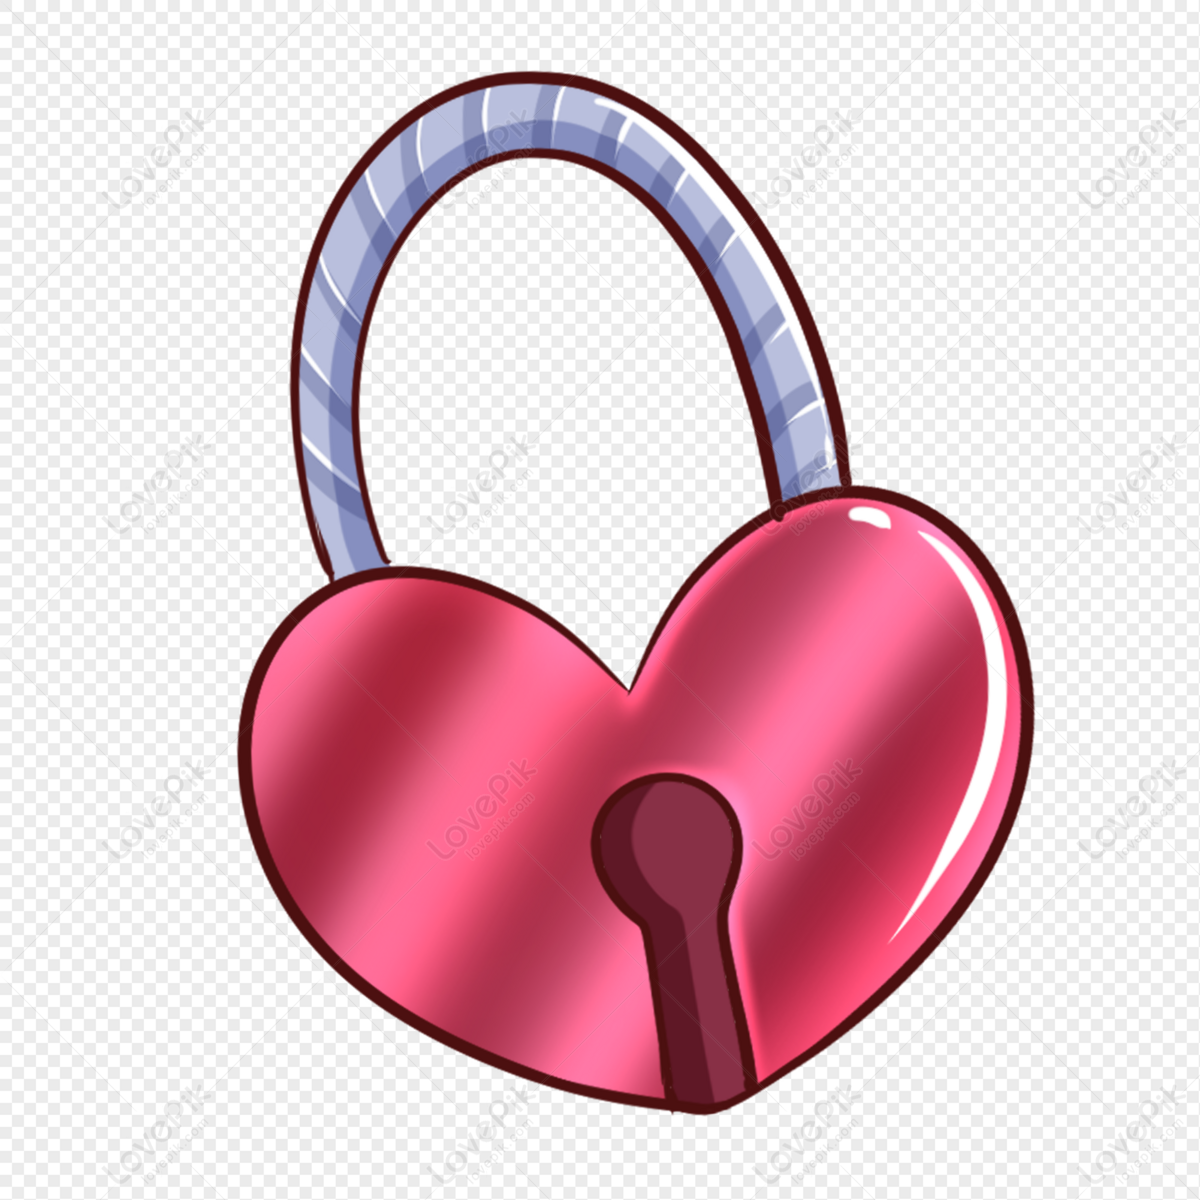 Love Lock PNG Transparent Images Free Download